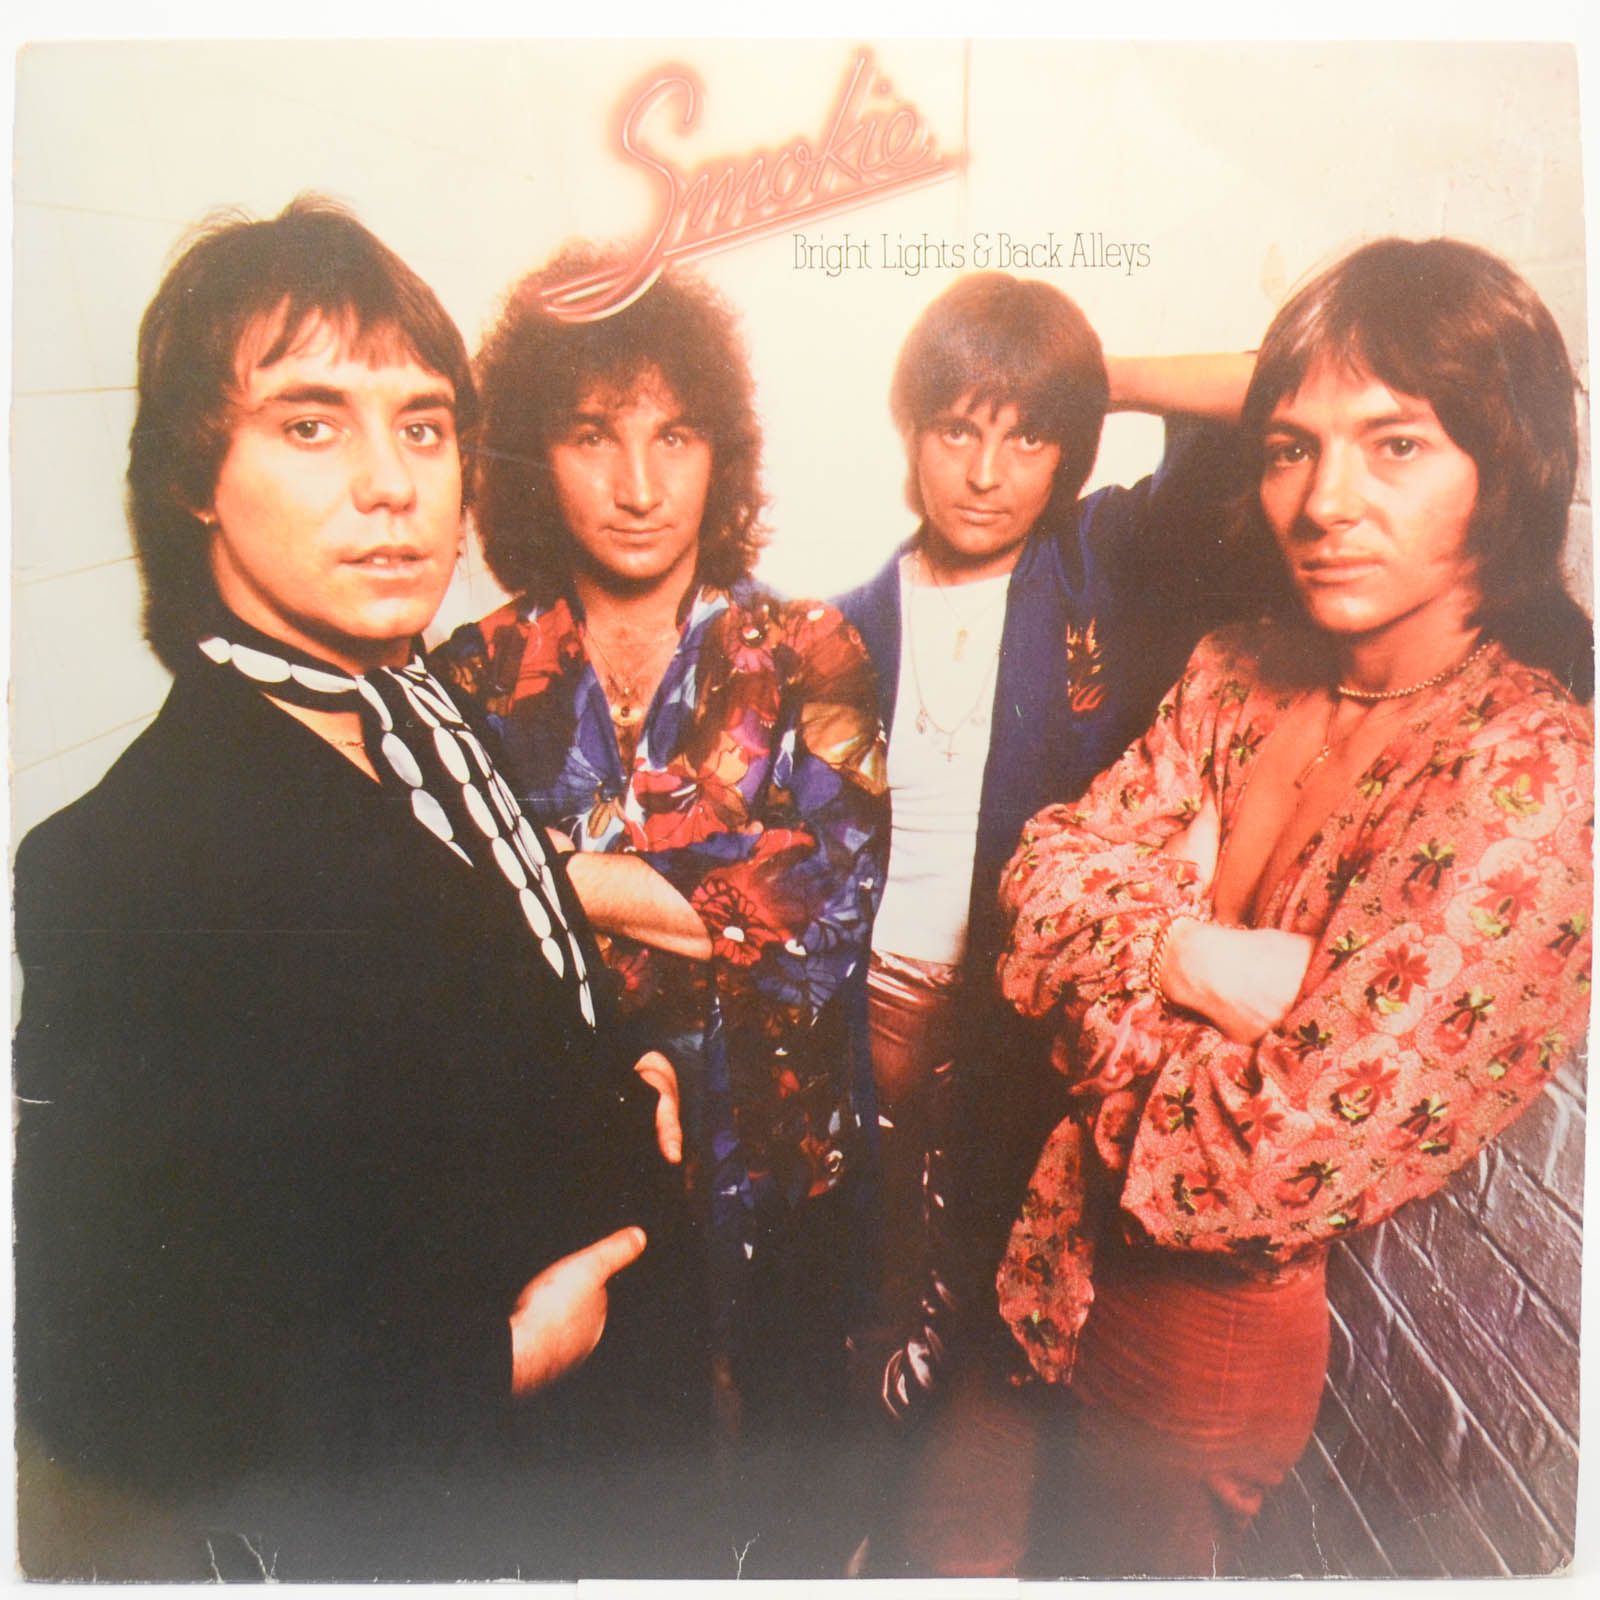 Smokie — Bright Lights & Back Alleys, 1977